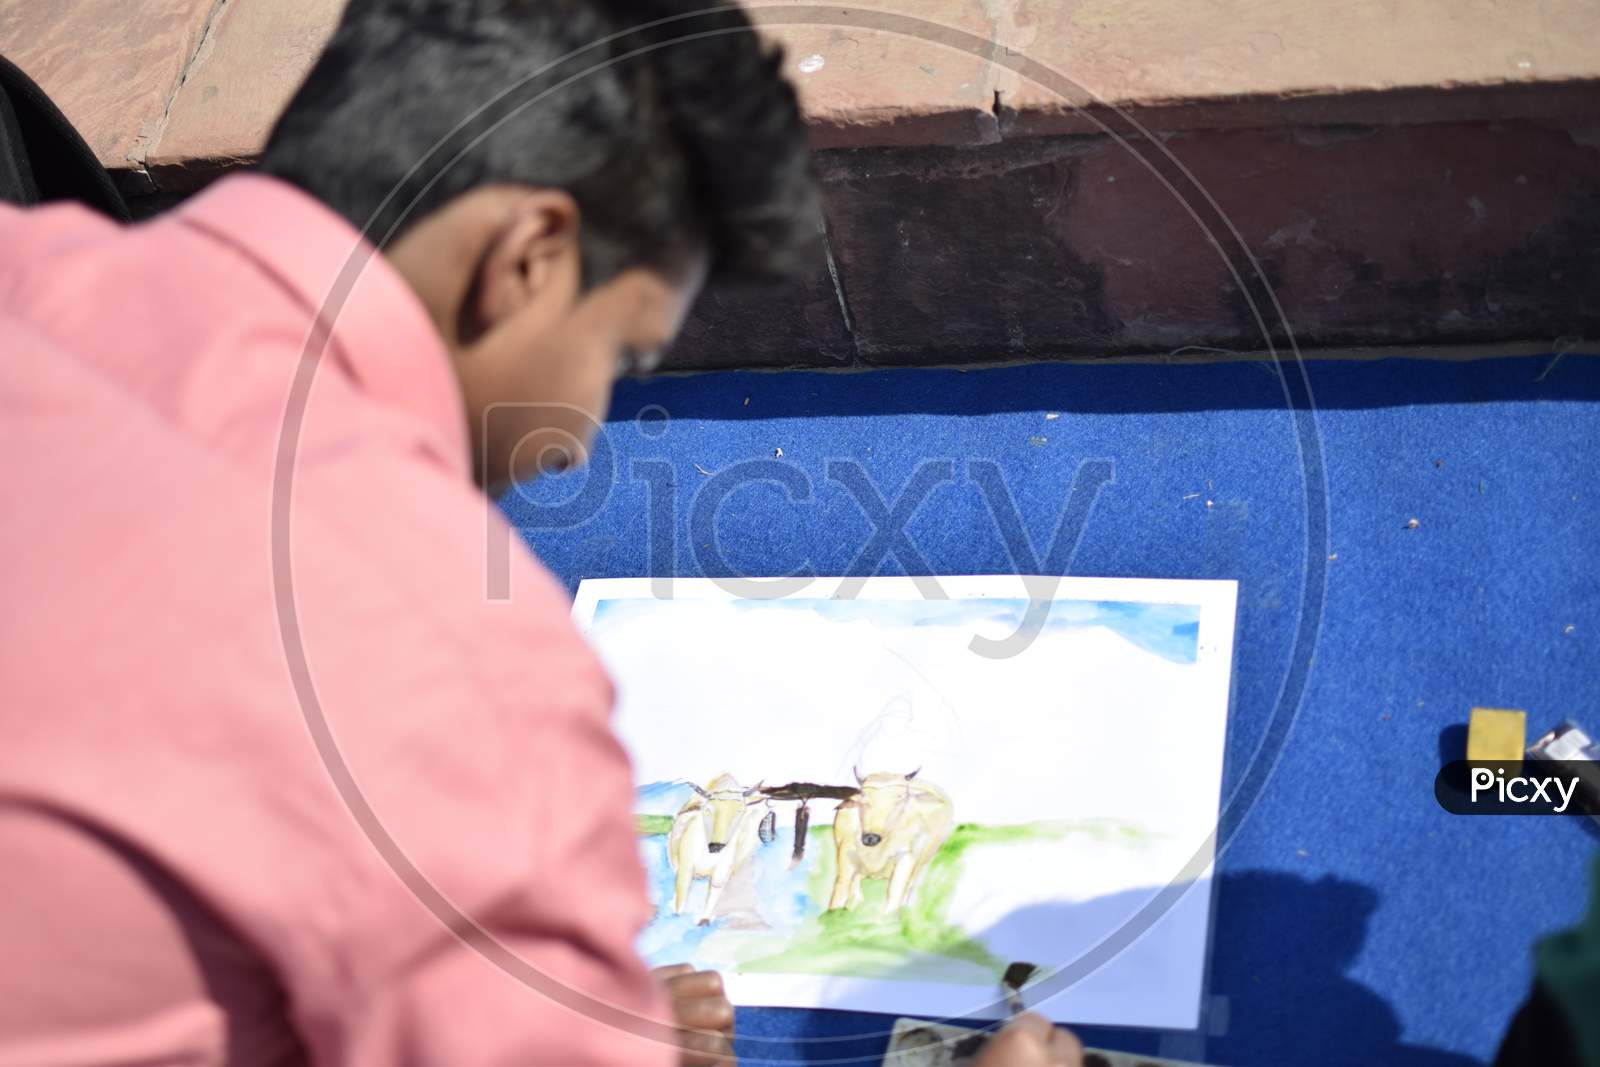 Indian School boy coloring bullock cart during art class